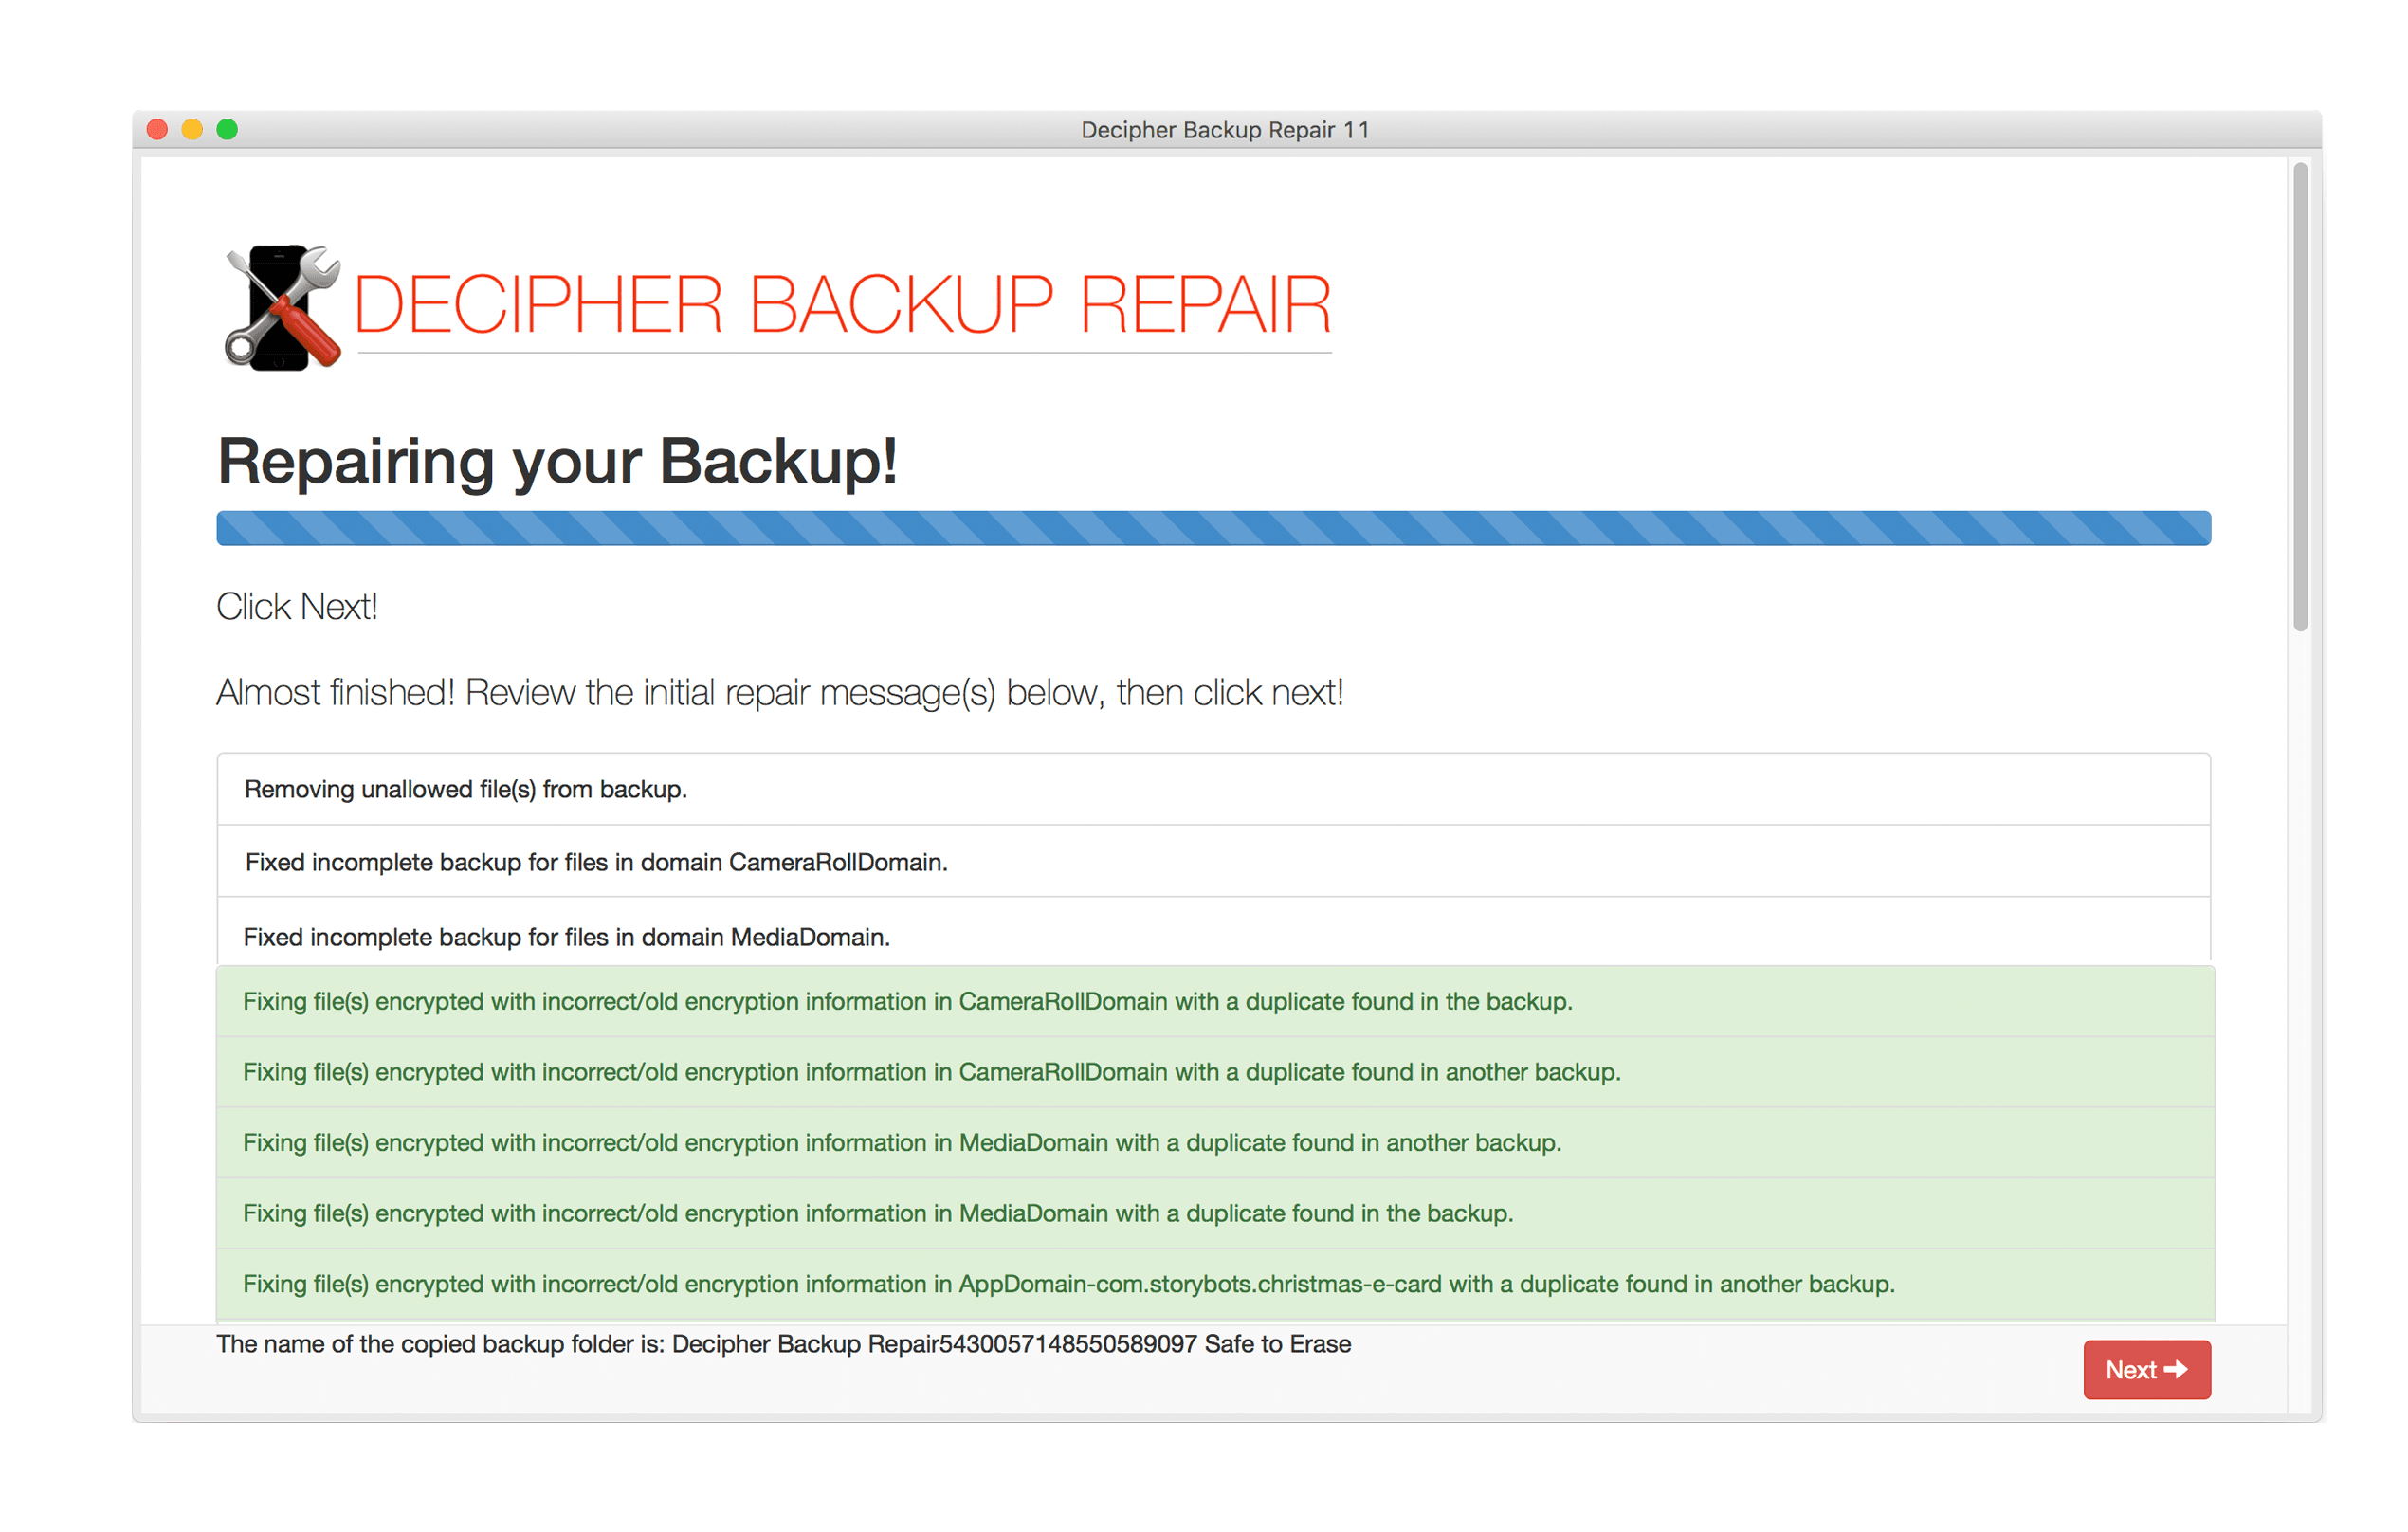 decipher backup repair typo in license code